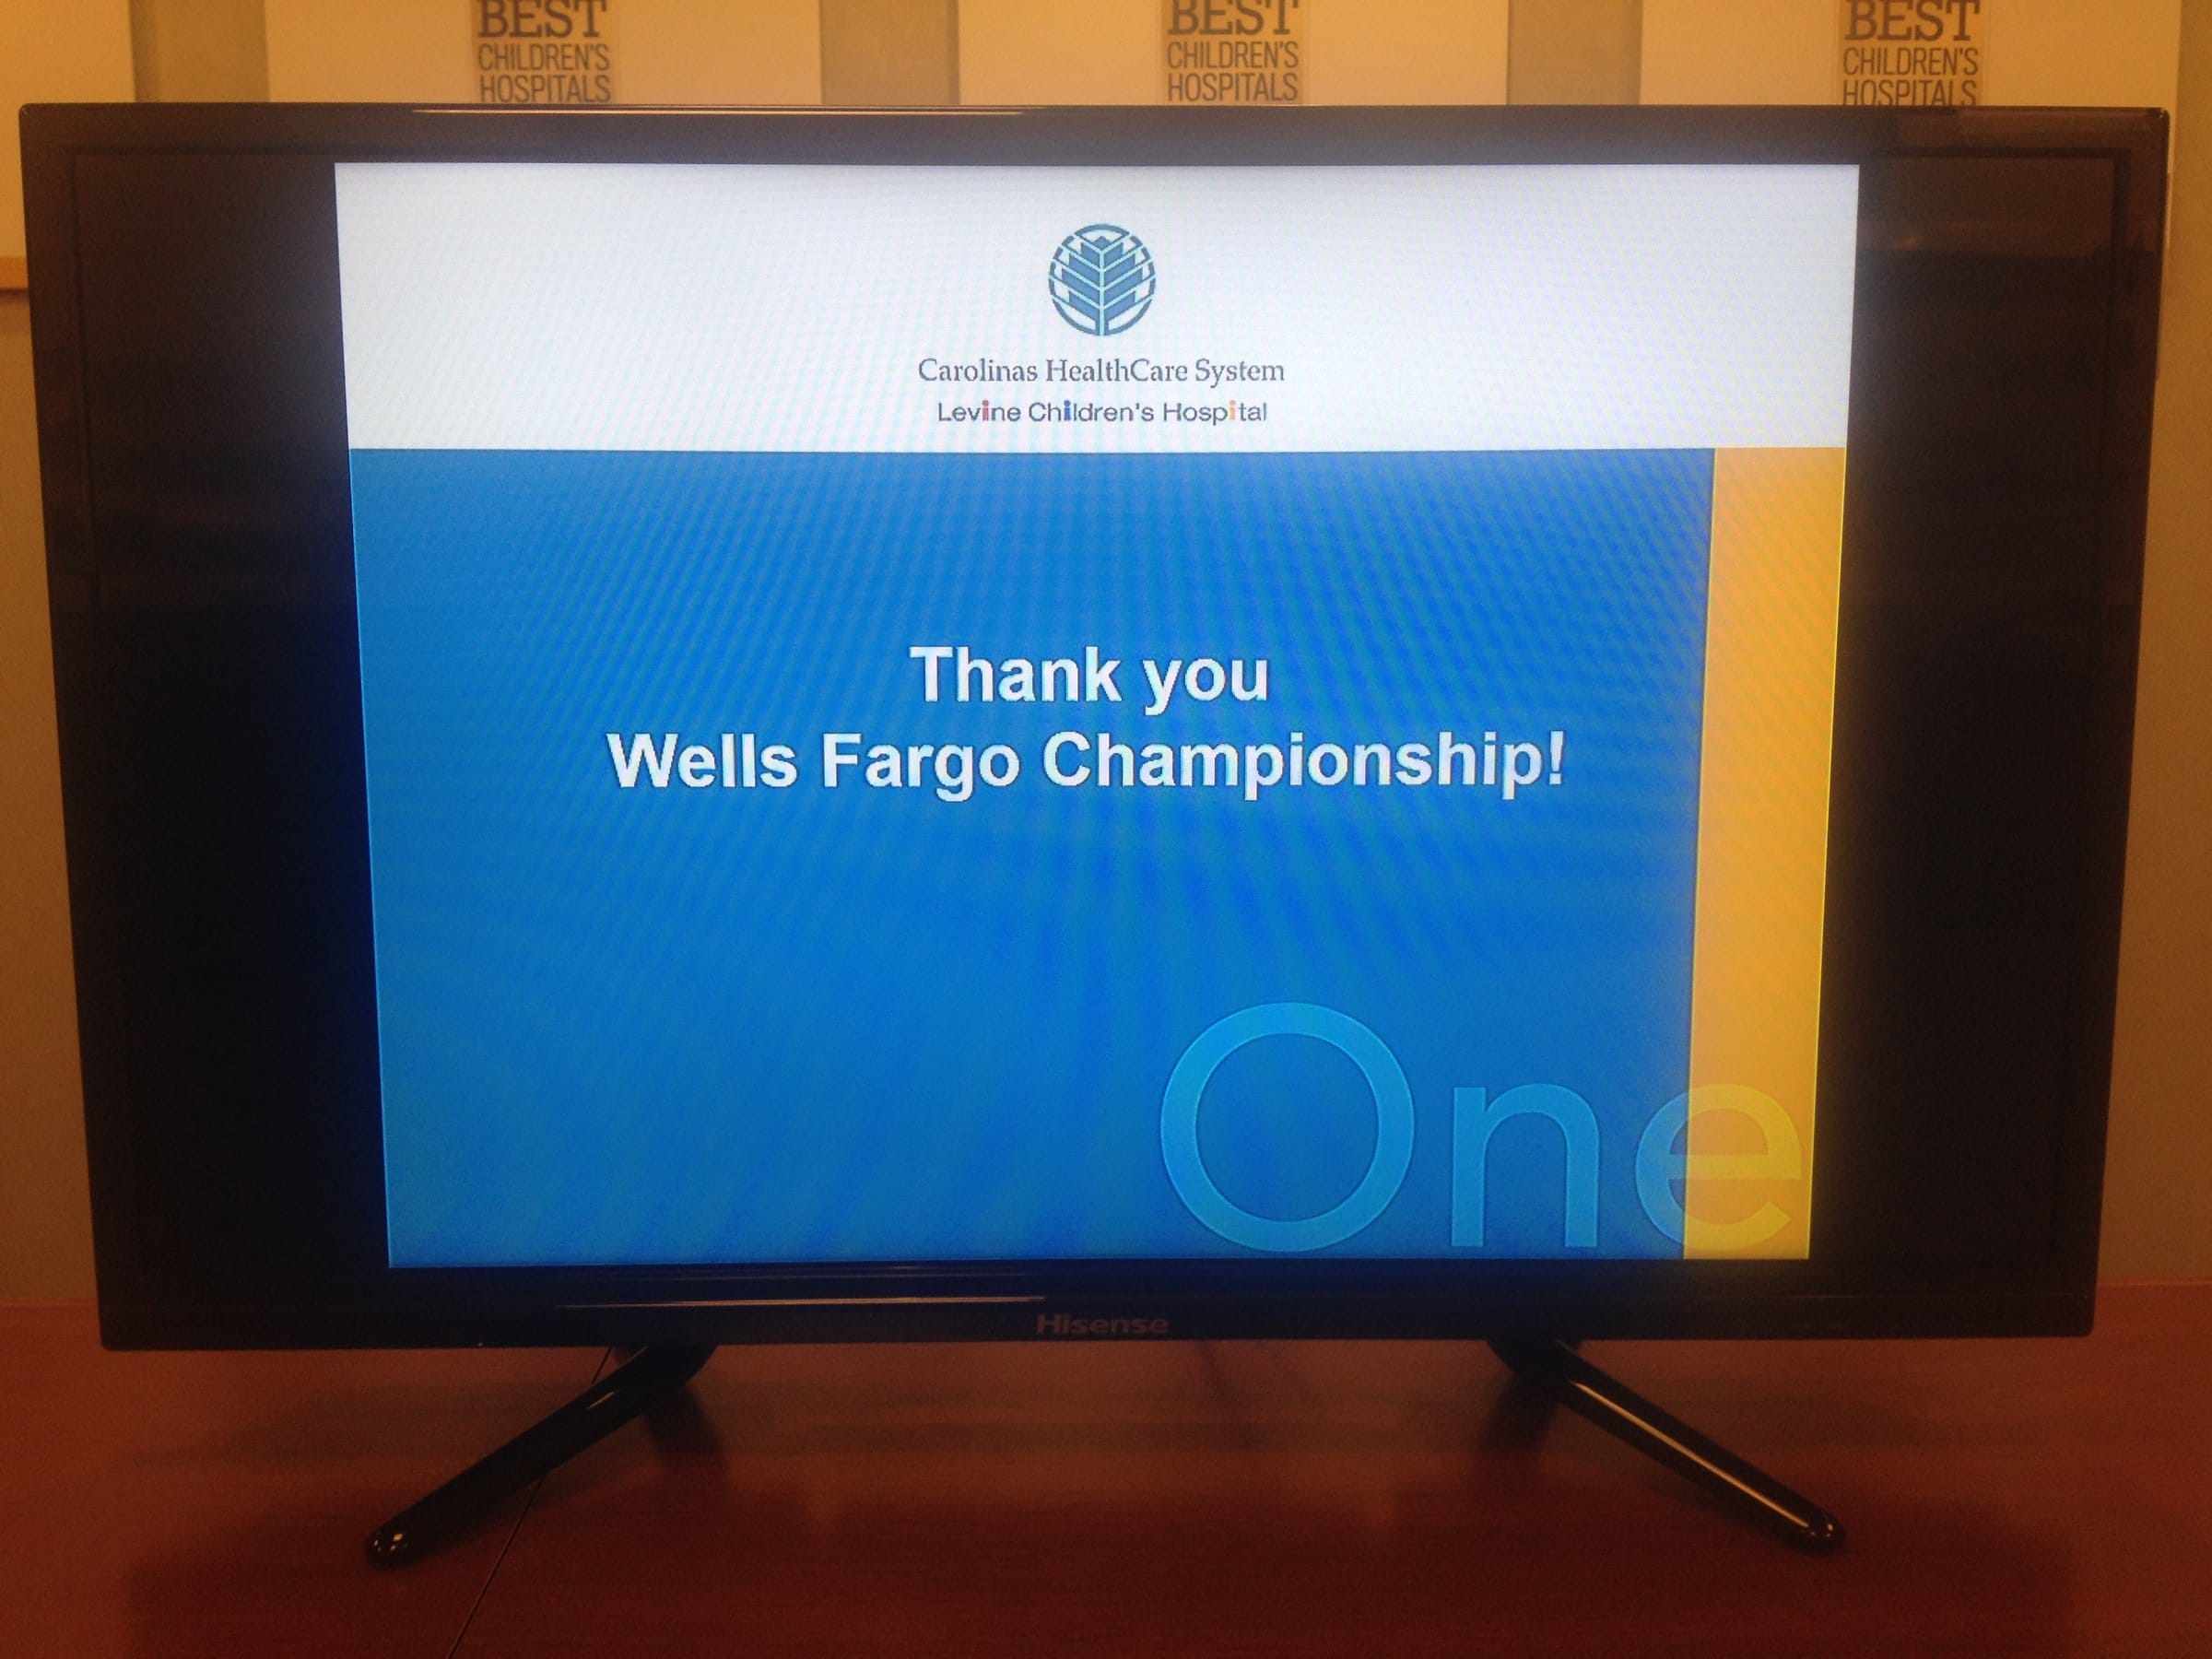 Wells Fargo Championship_TV Donation to LCH (2)